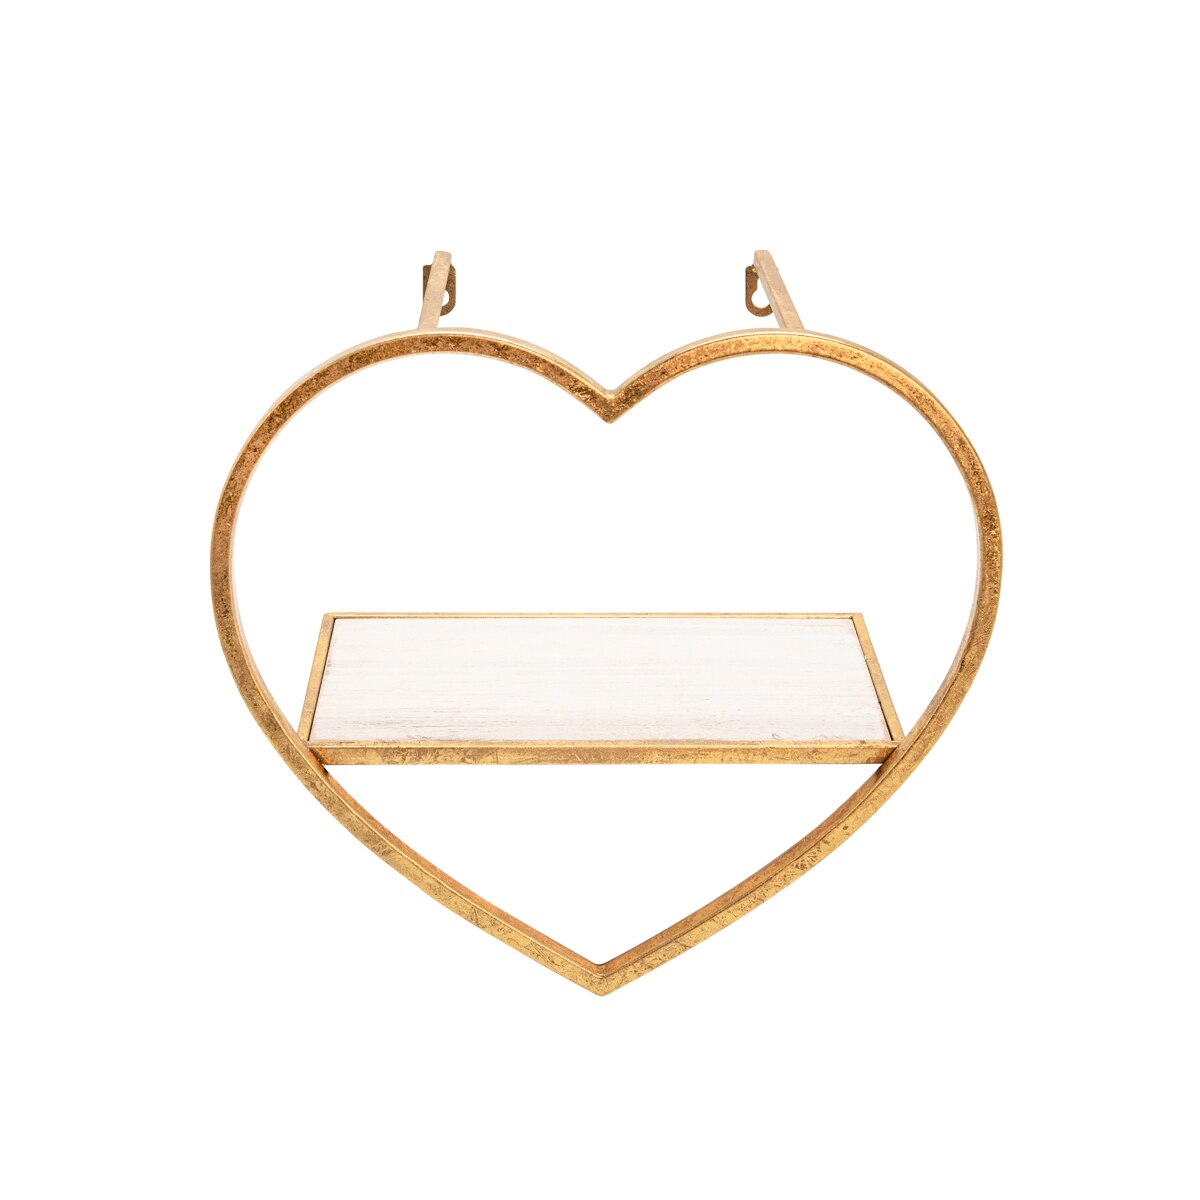 S/3 Metal/wood Heart Wall Shelves, Gold